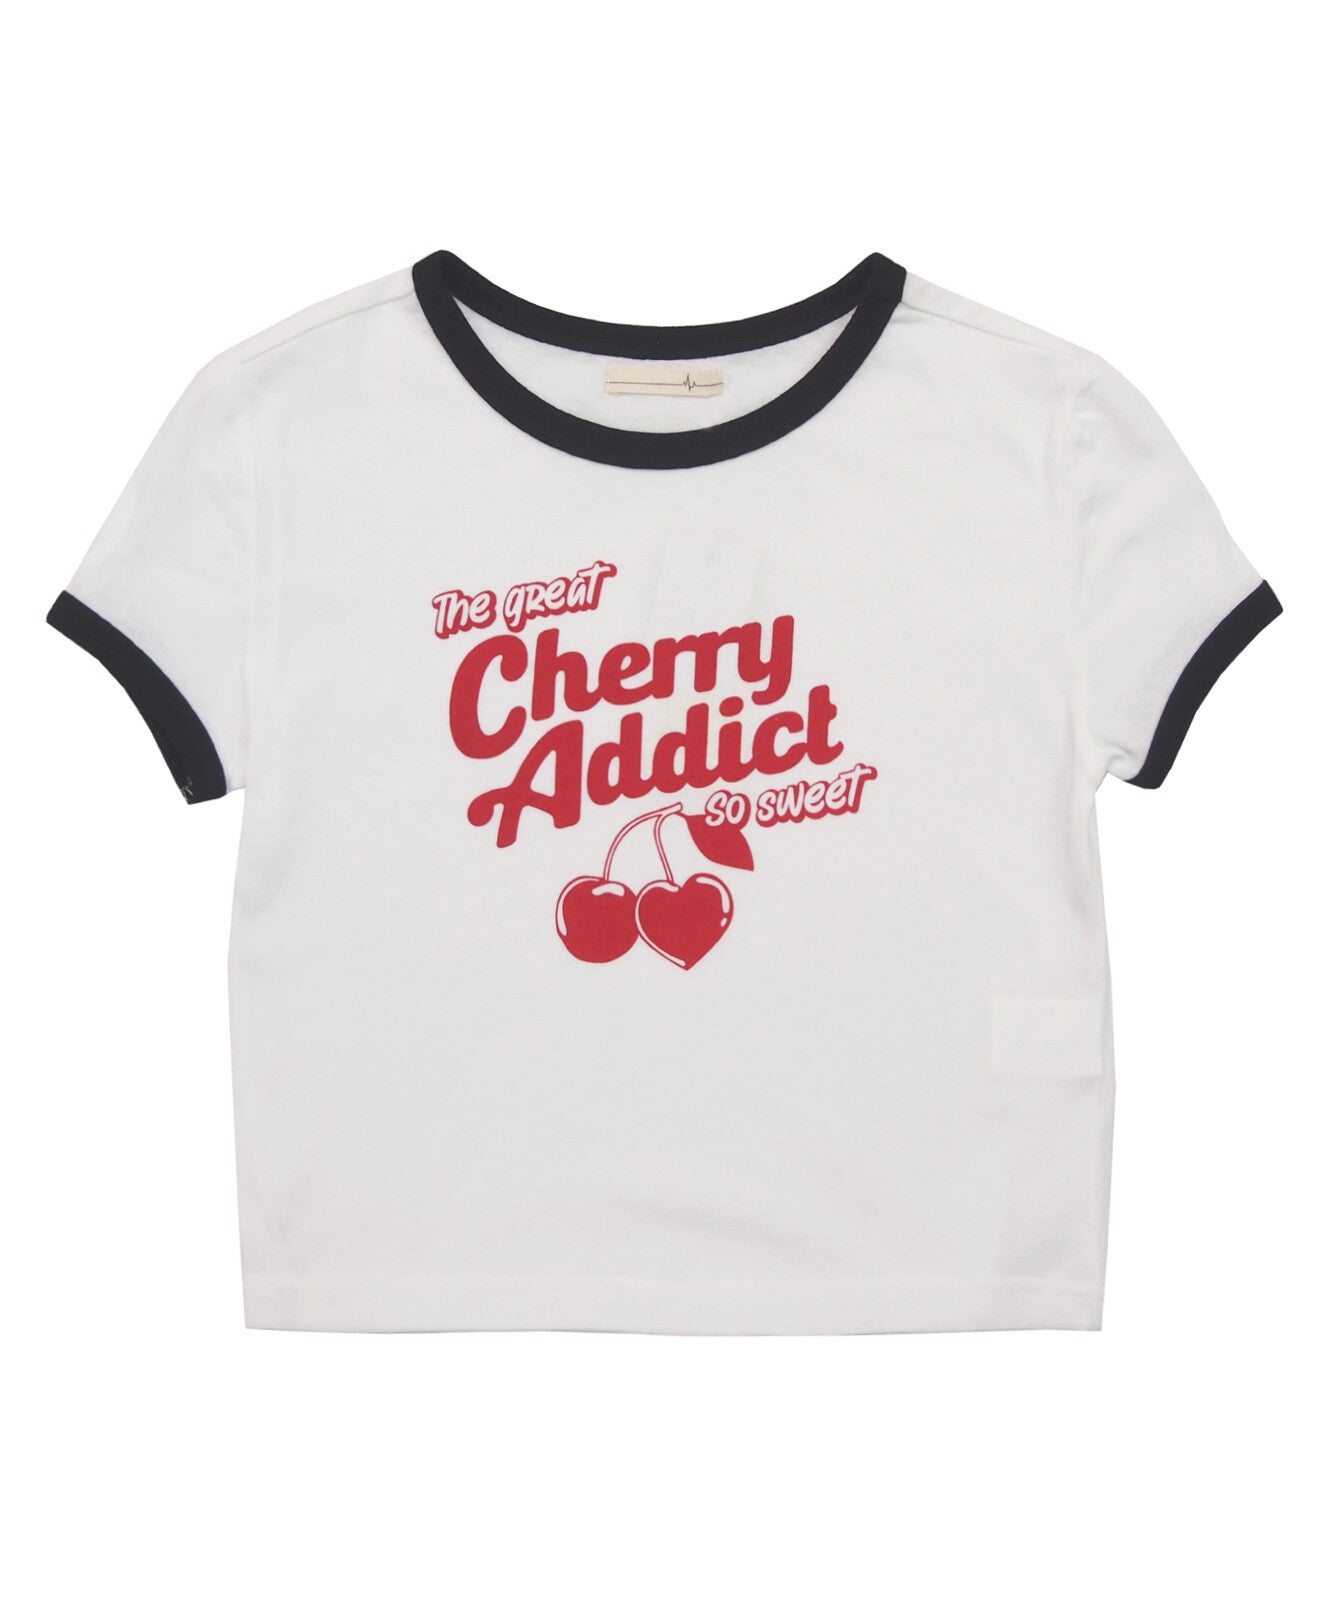 Cherry cherry ringer chibi T-shirt - YOUAREMYPOISON